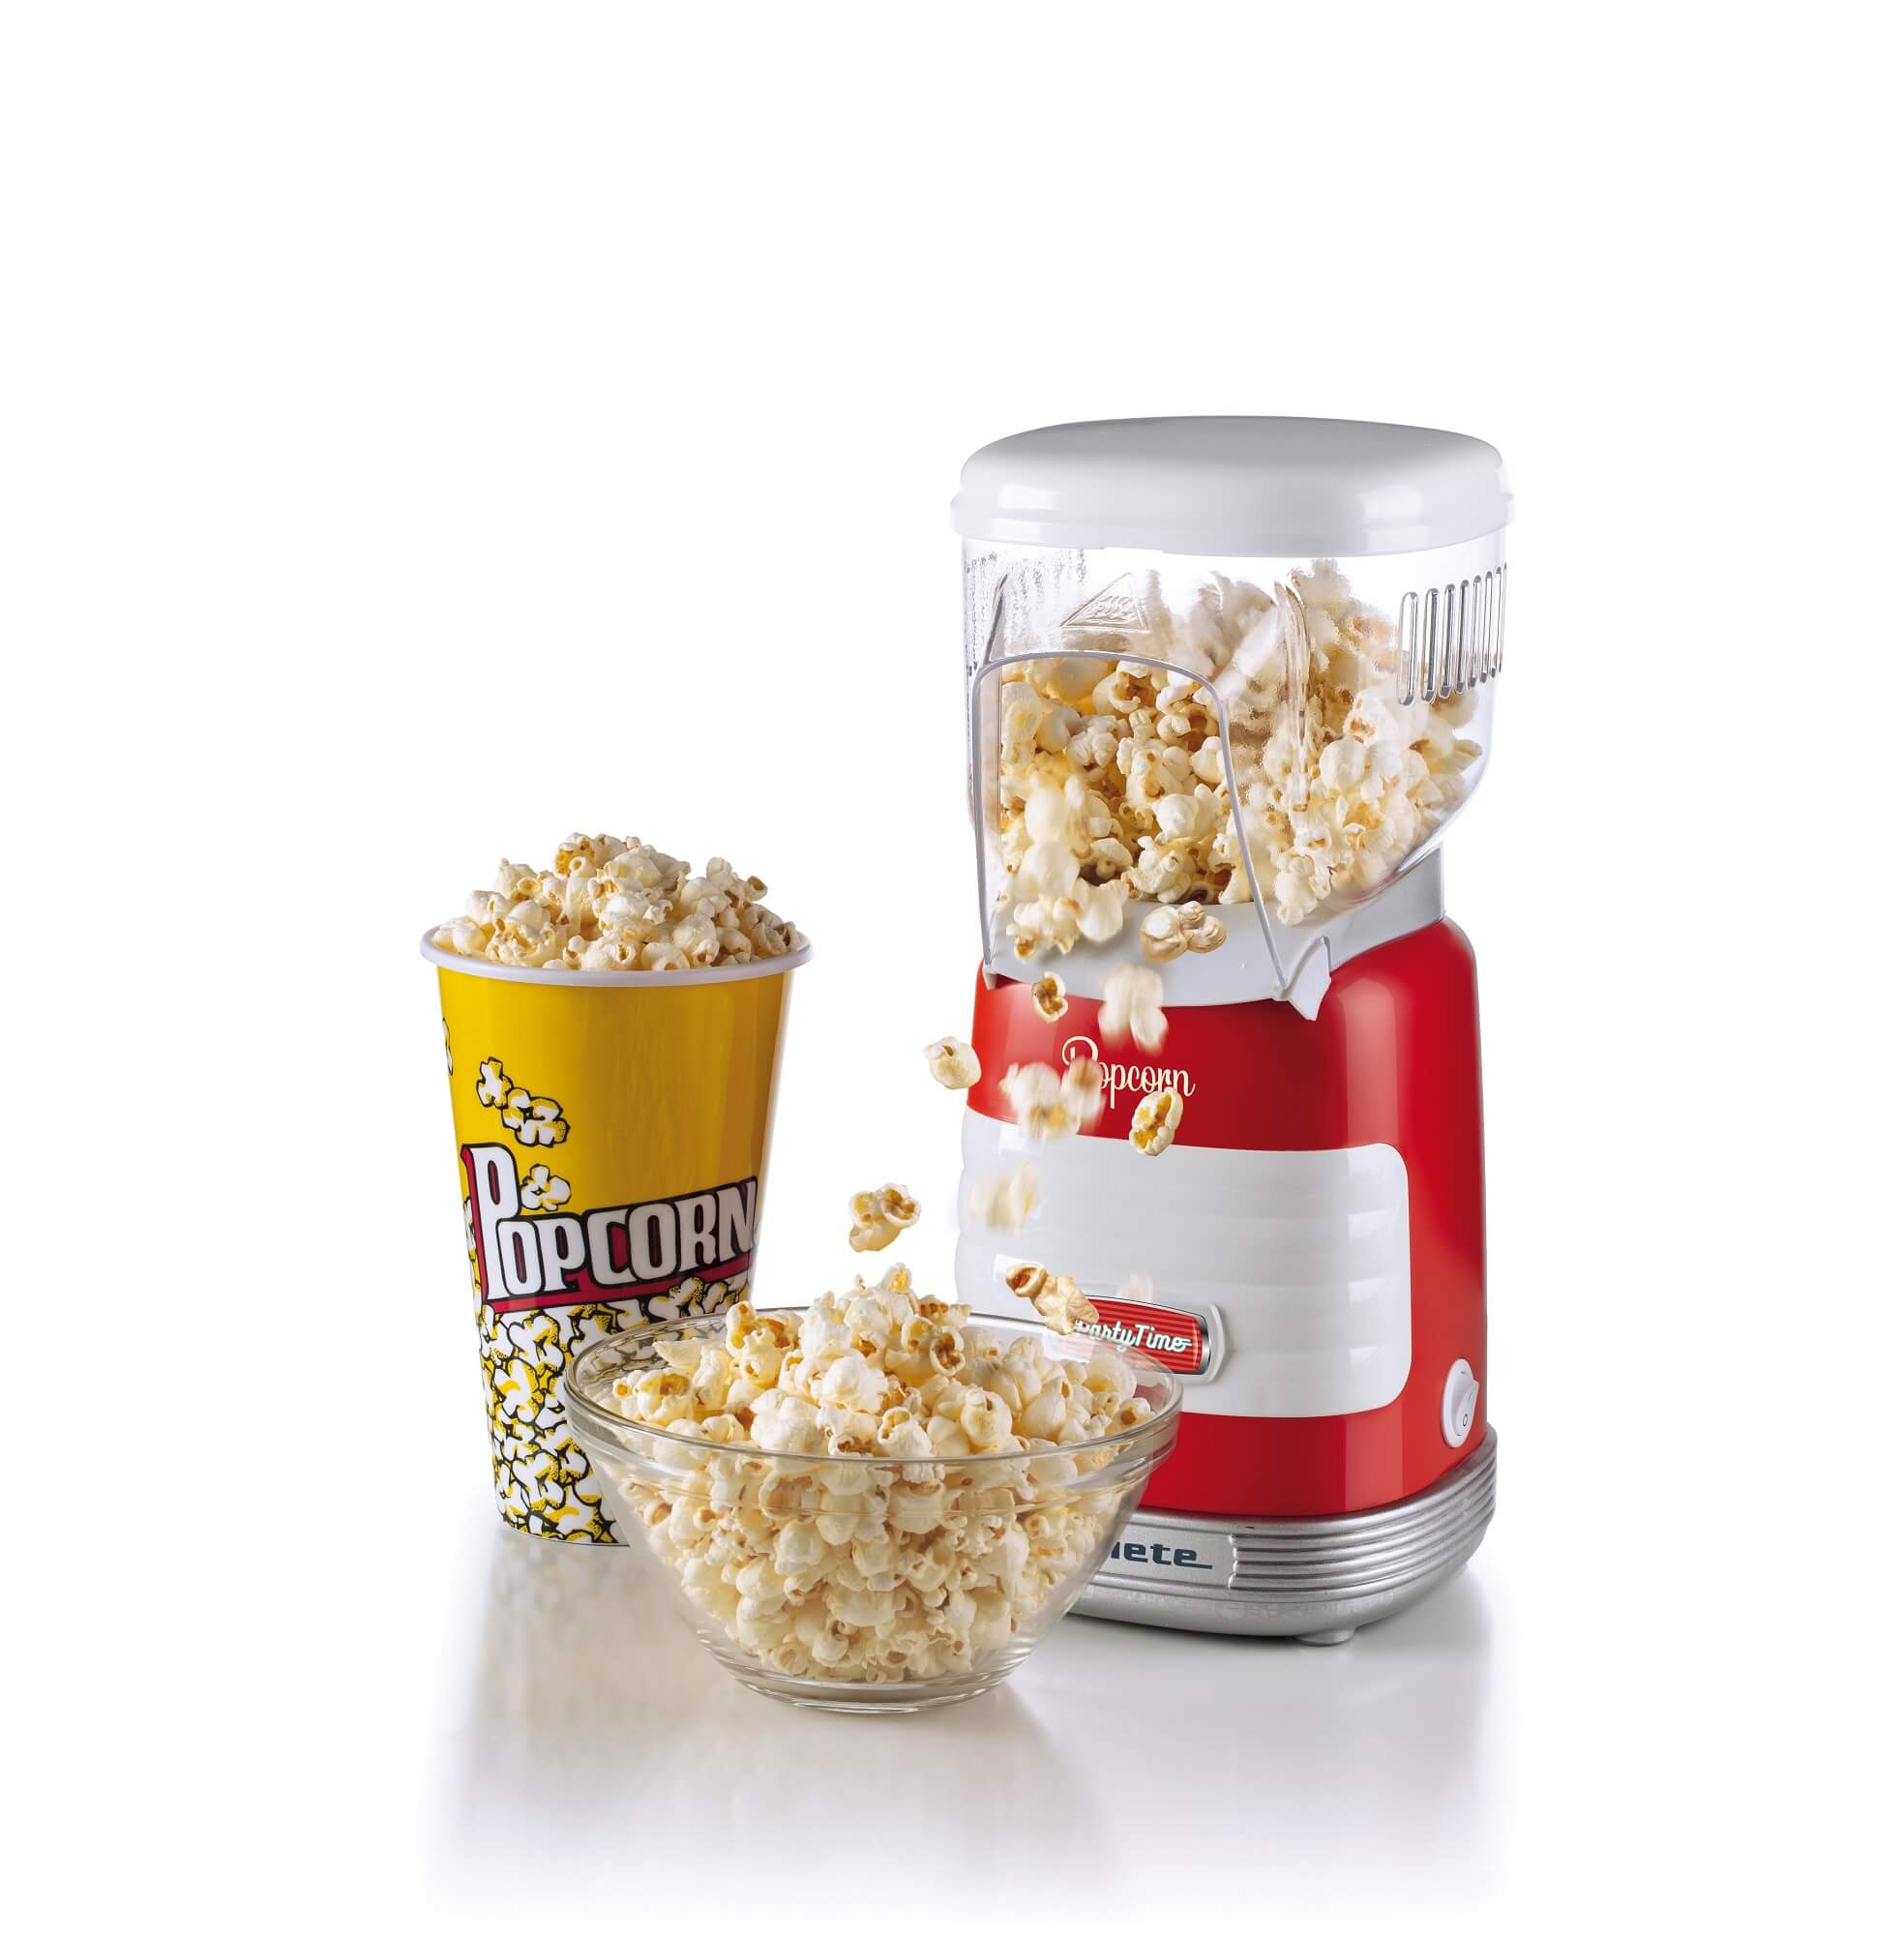 Compact Popcorn party time ariete 2956 Mısır Makinesi